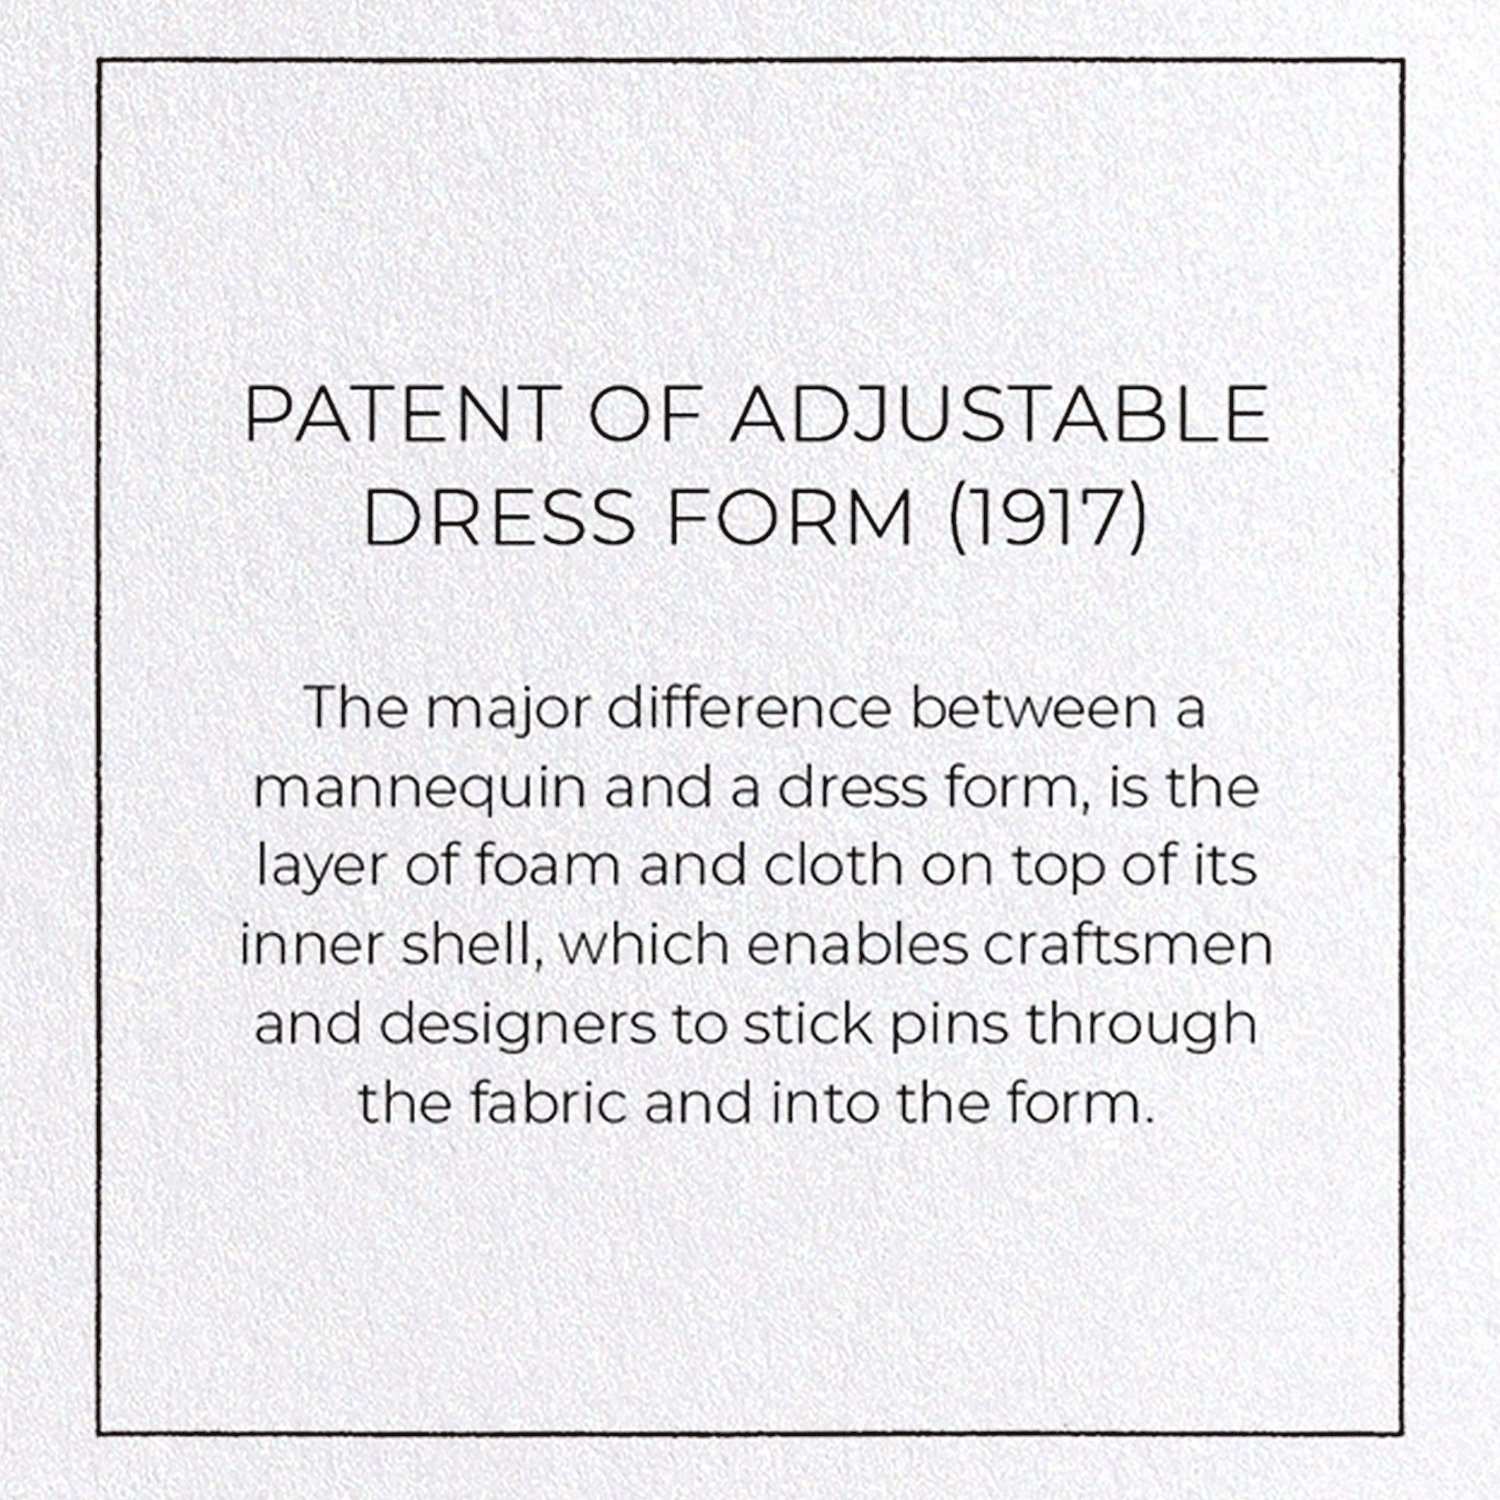 PATENT OF ADJUSTABLE DRESS FORM (1917)